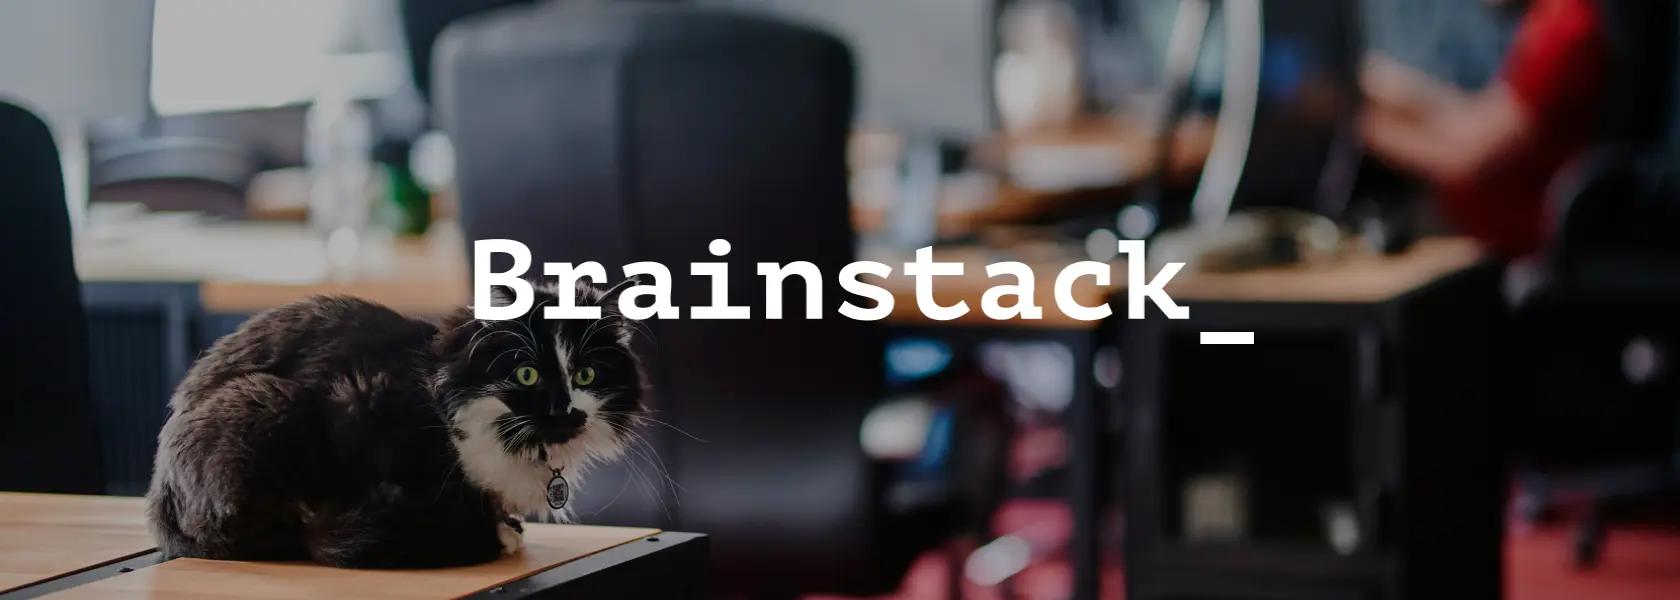 brainstack_ logo сat.webp